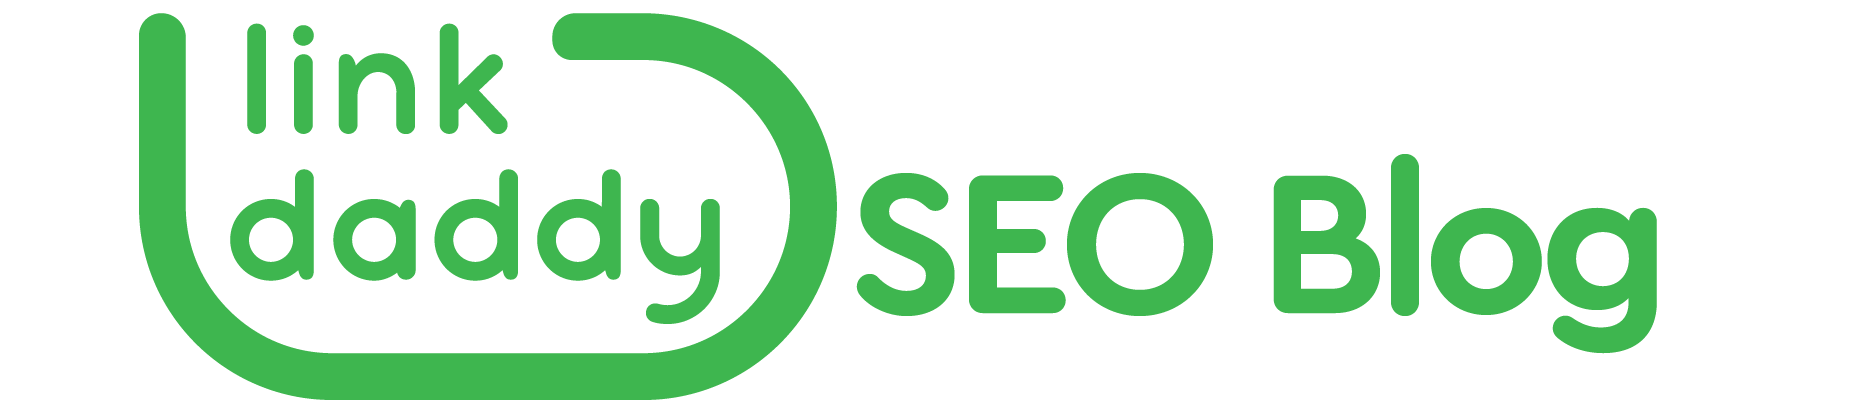 https://storage.googleapis.com/cloudsites/seo-services/8678yb5wg/img/cropped-linkdaddy-seoblog-logo.png